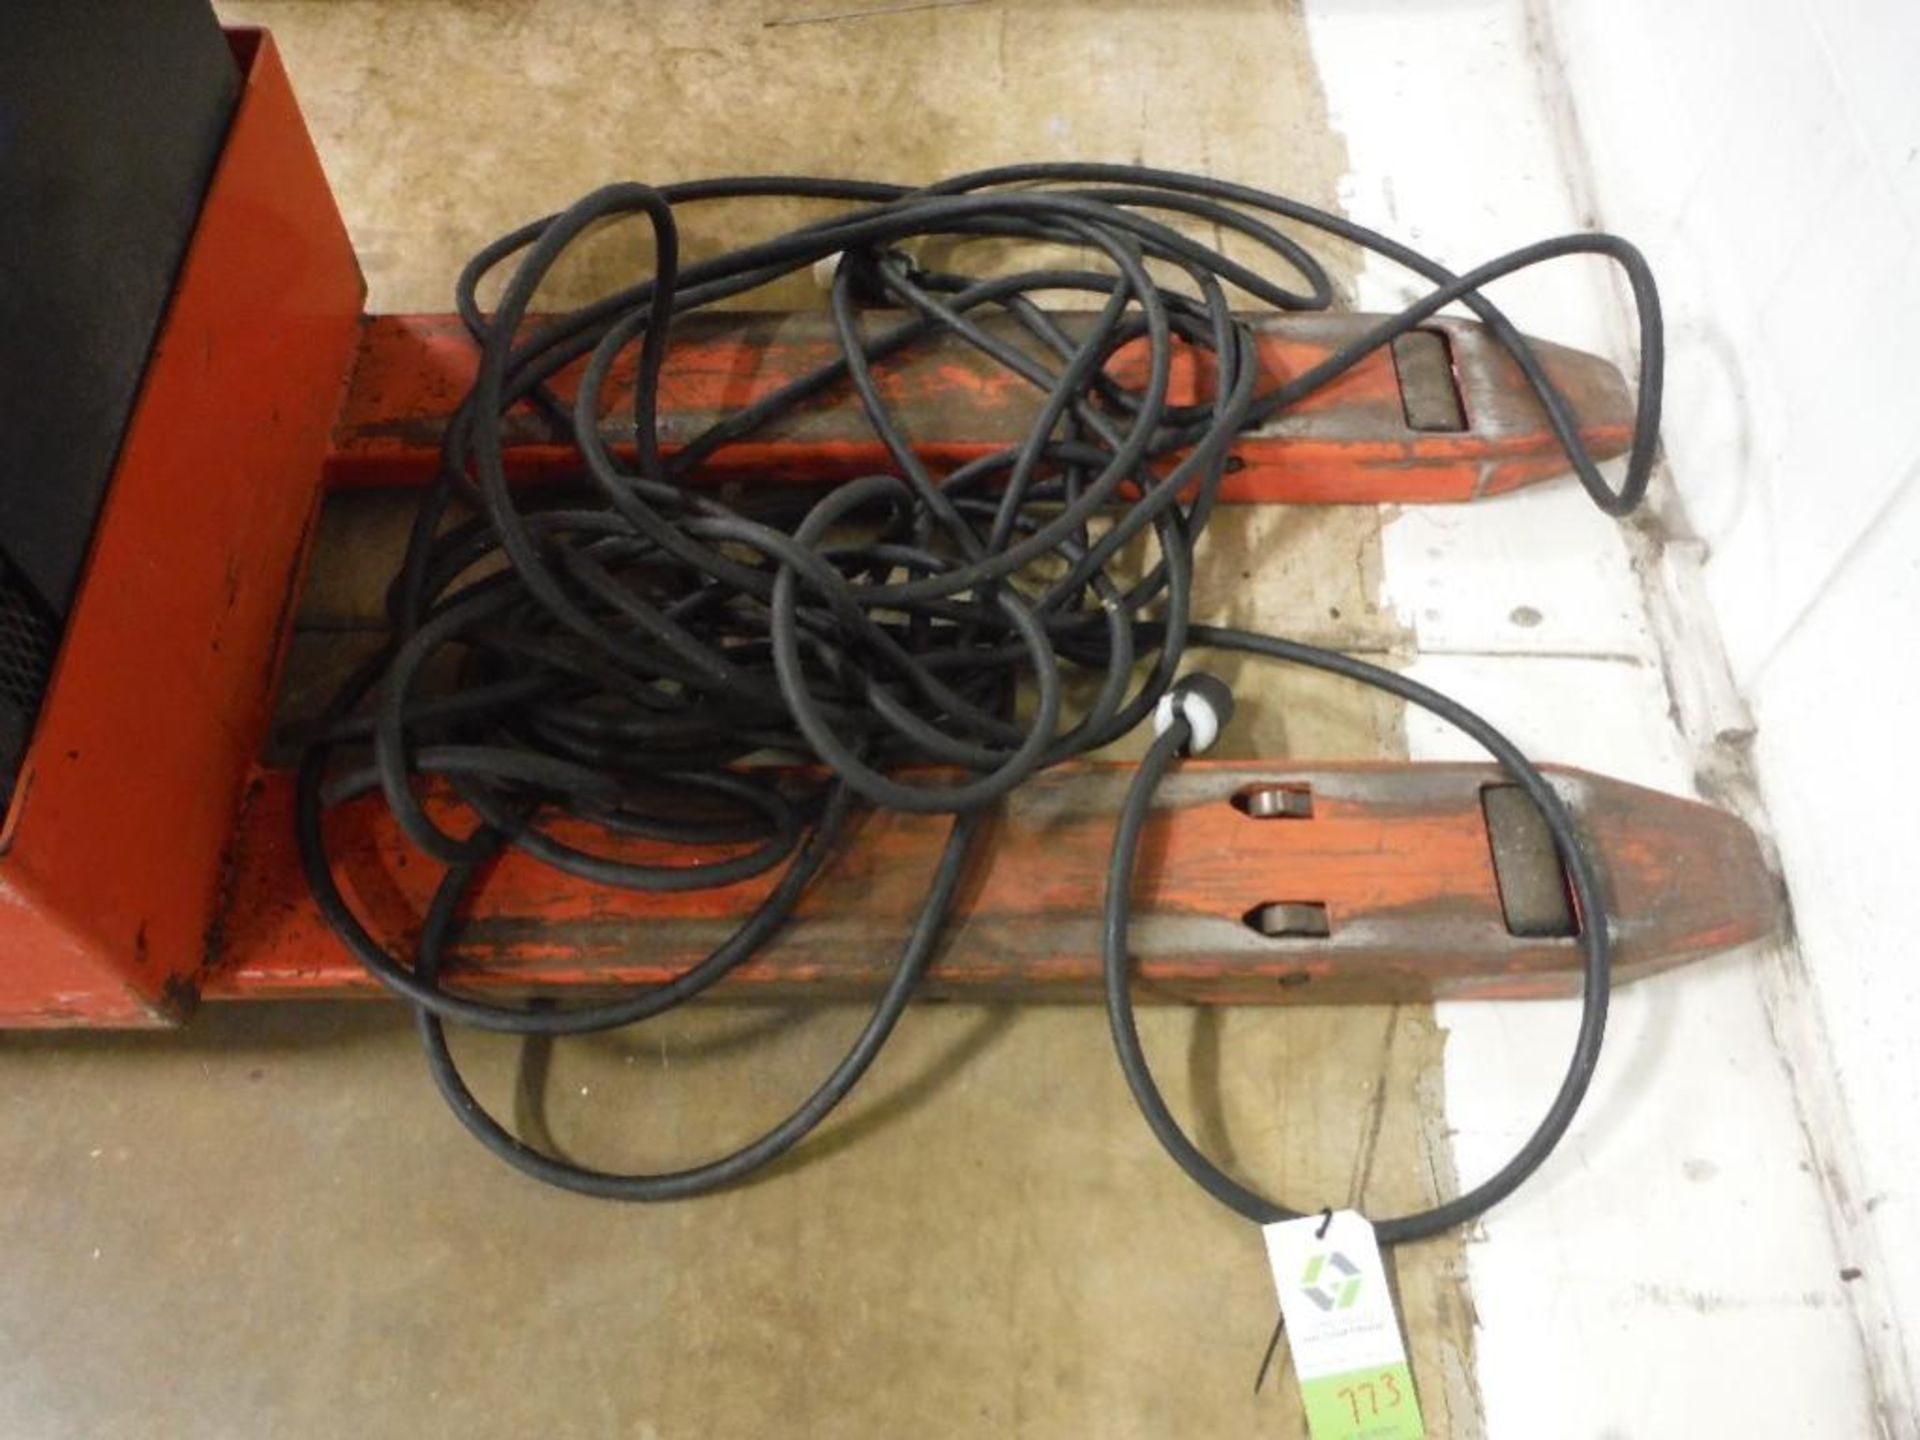 75 ft. extension cord, 20 amp, 480 v - Rigging Fee: $10